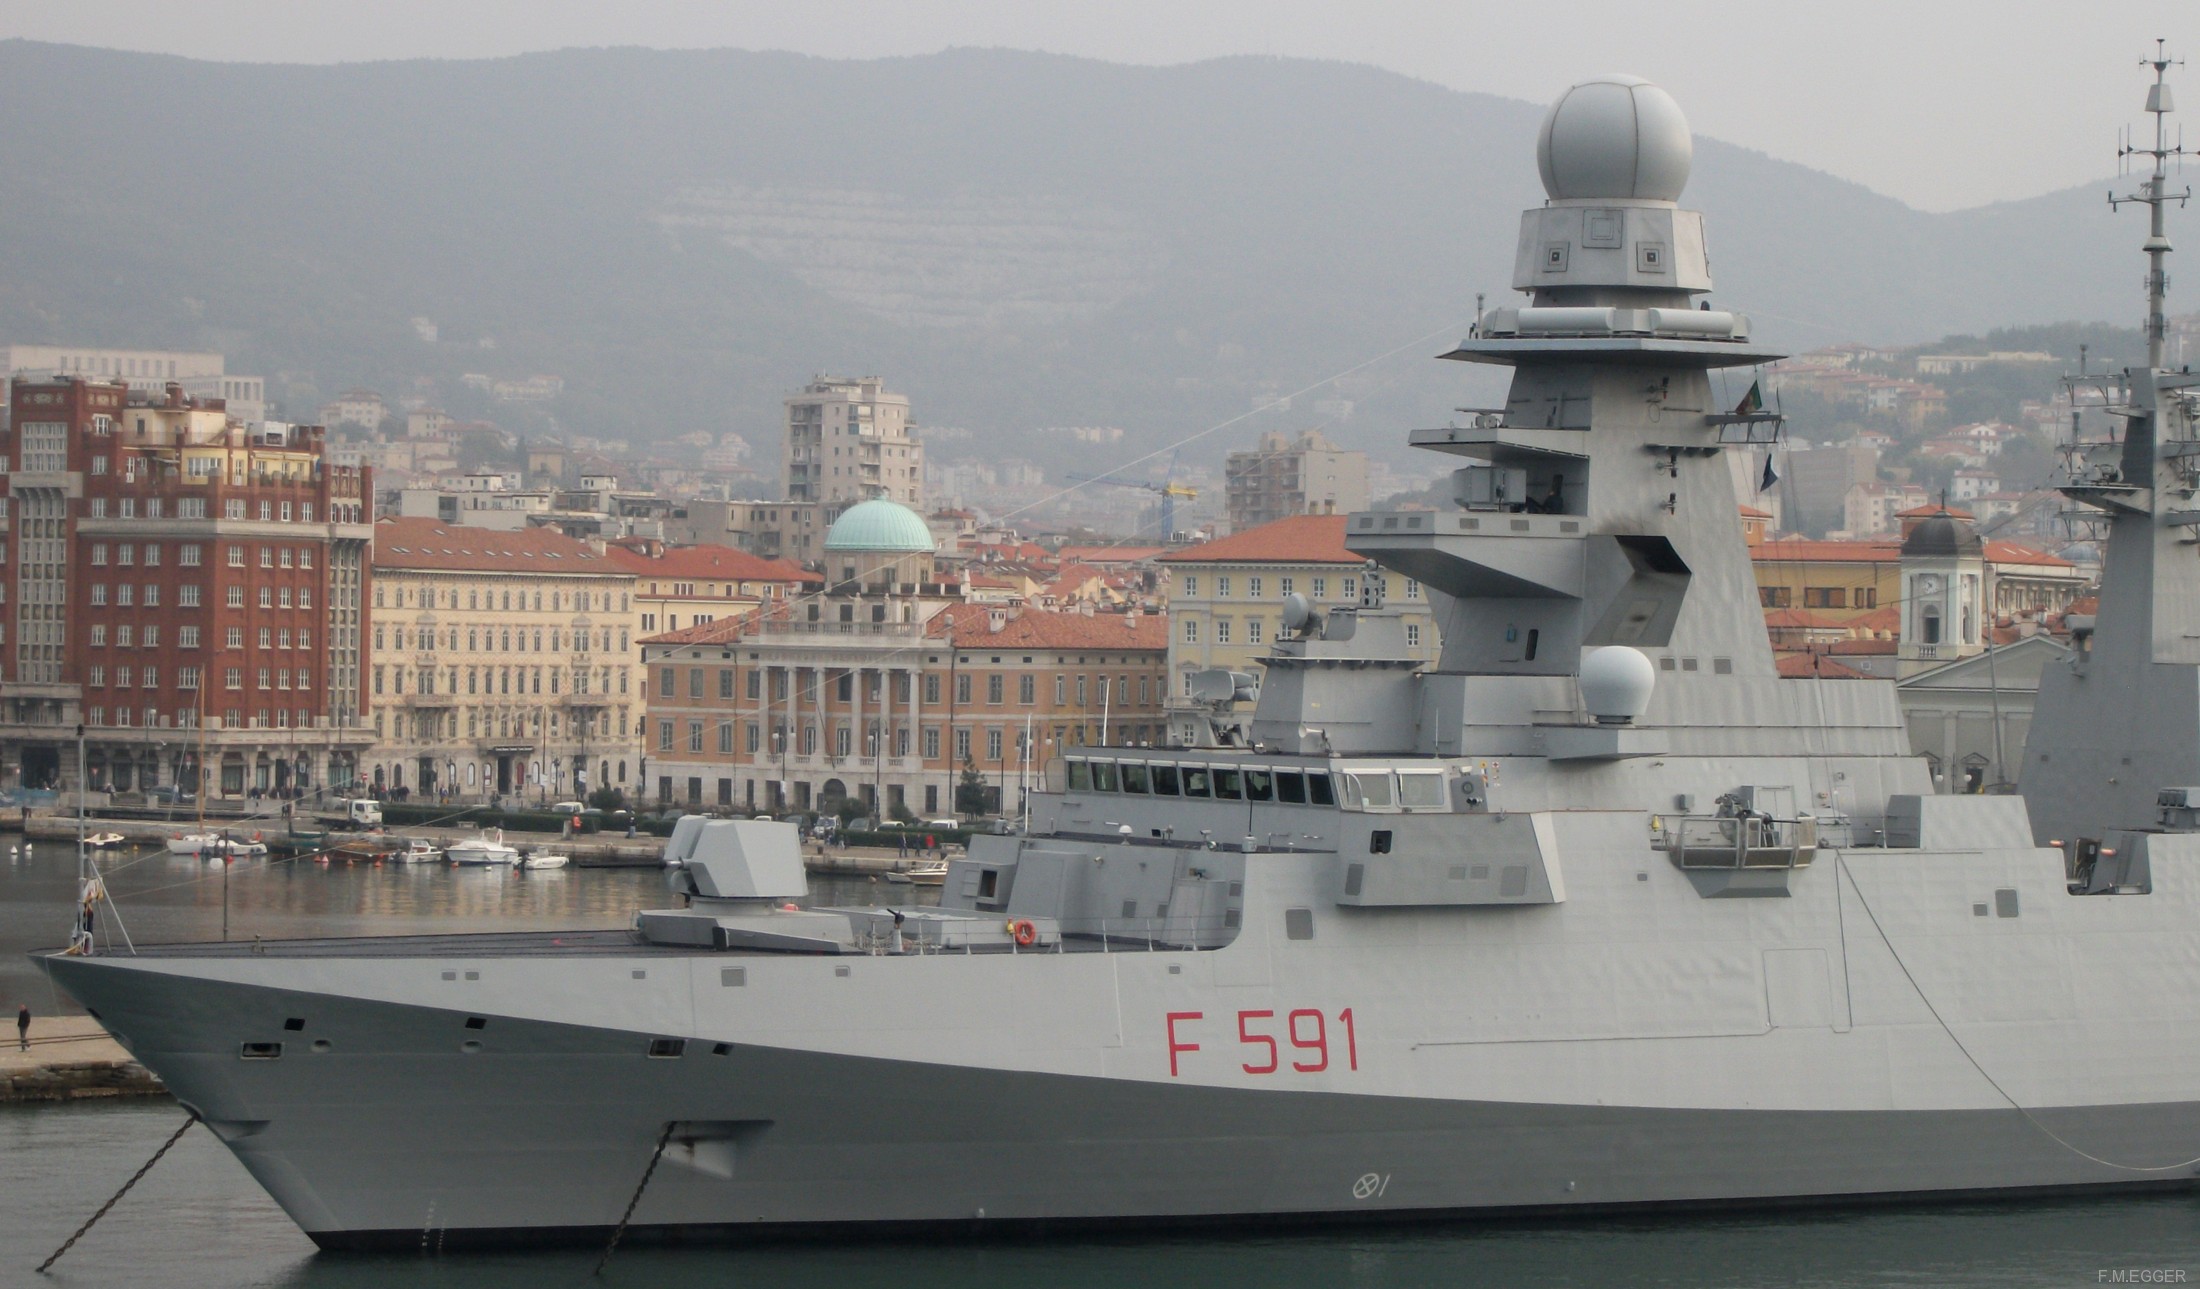 f-591 virginio fasan its nave bergamini fremm class guided missile frigate italian navy marina militare x42 trieste port